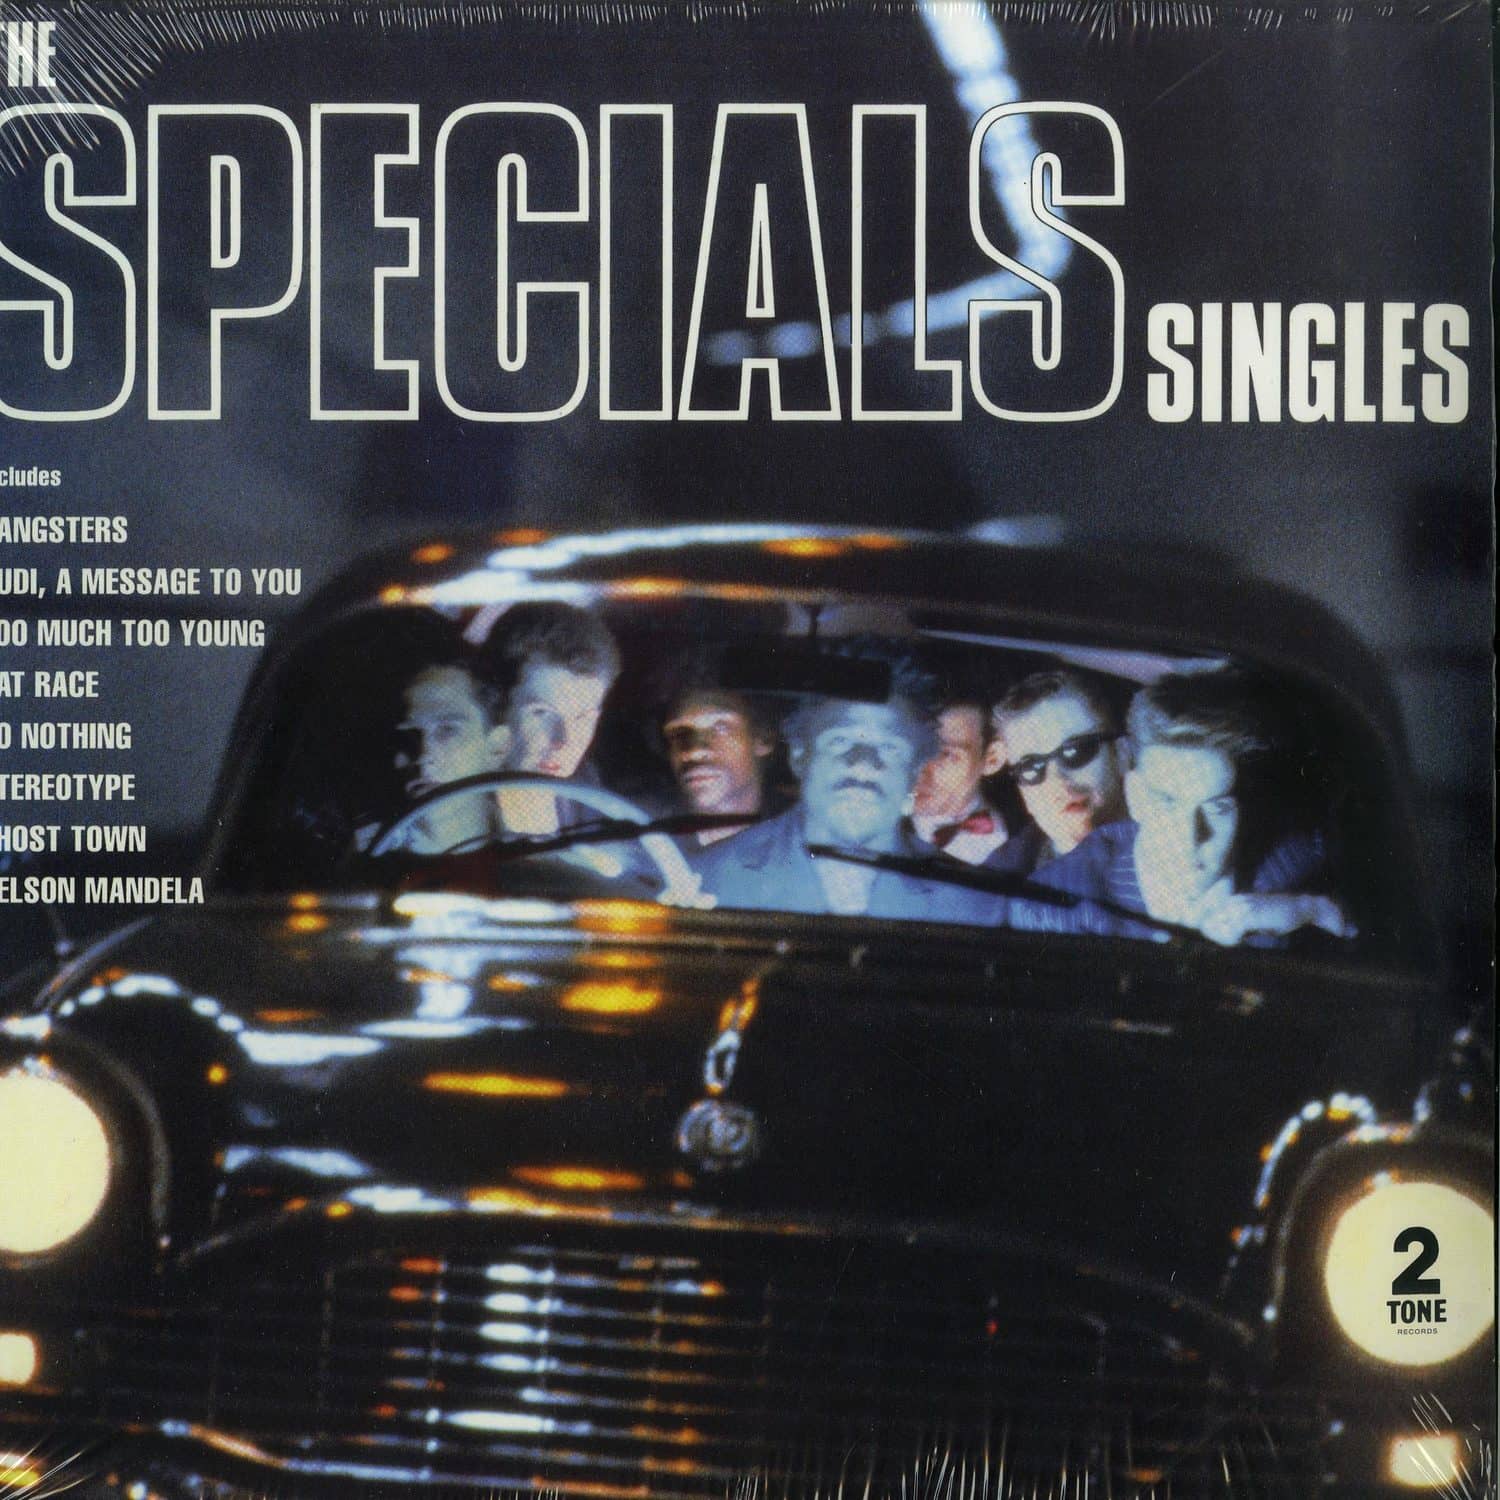 The Specials - THE SPECIALS SINGLES 